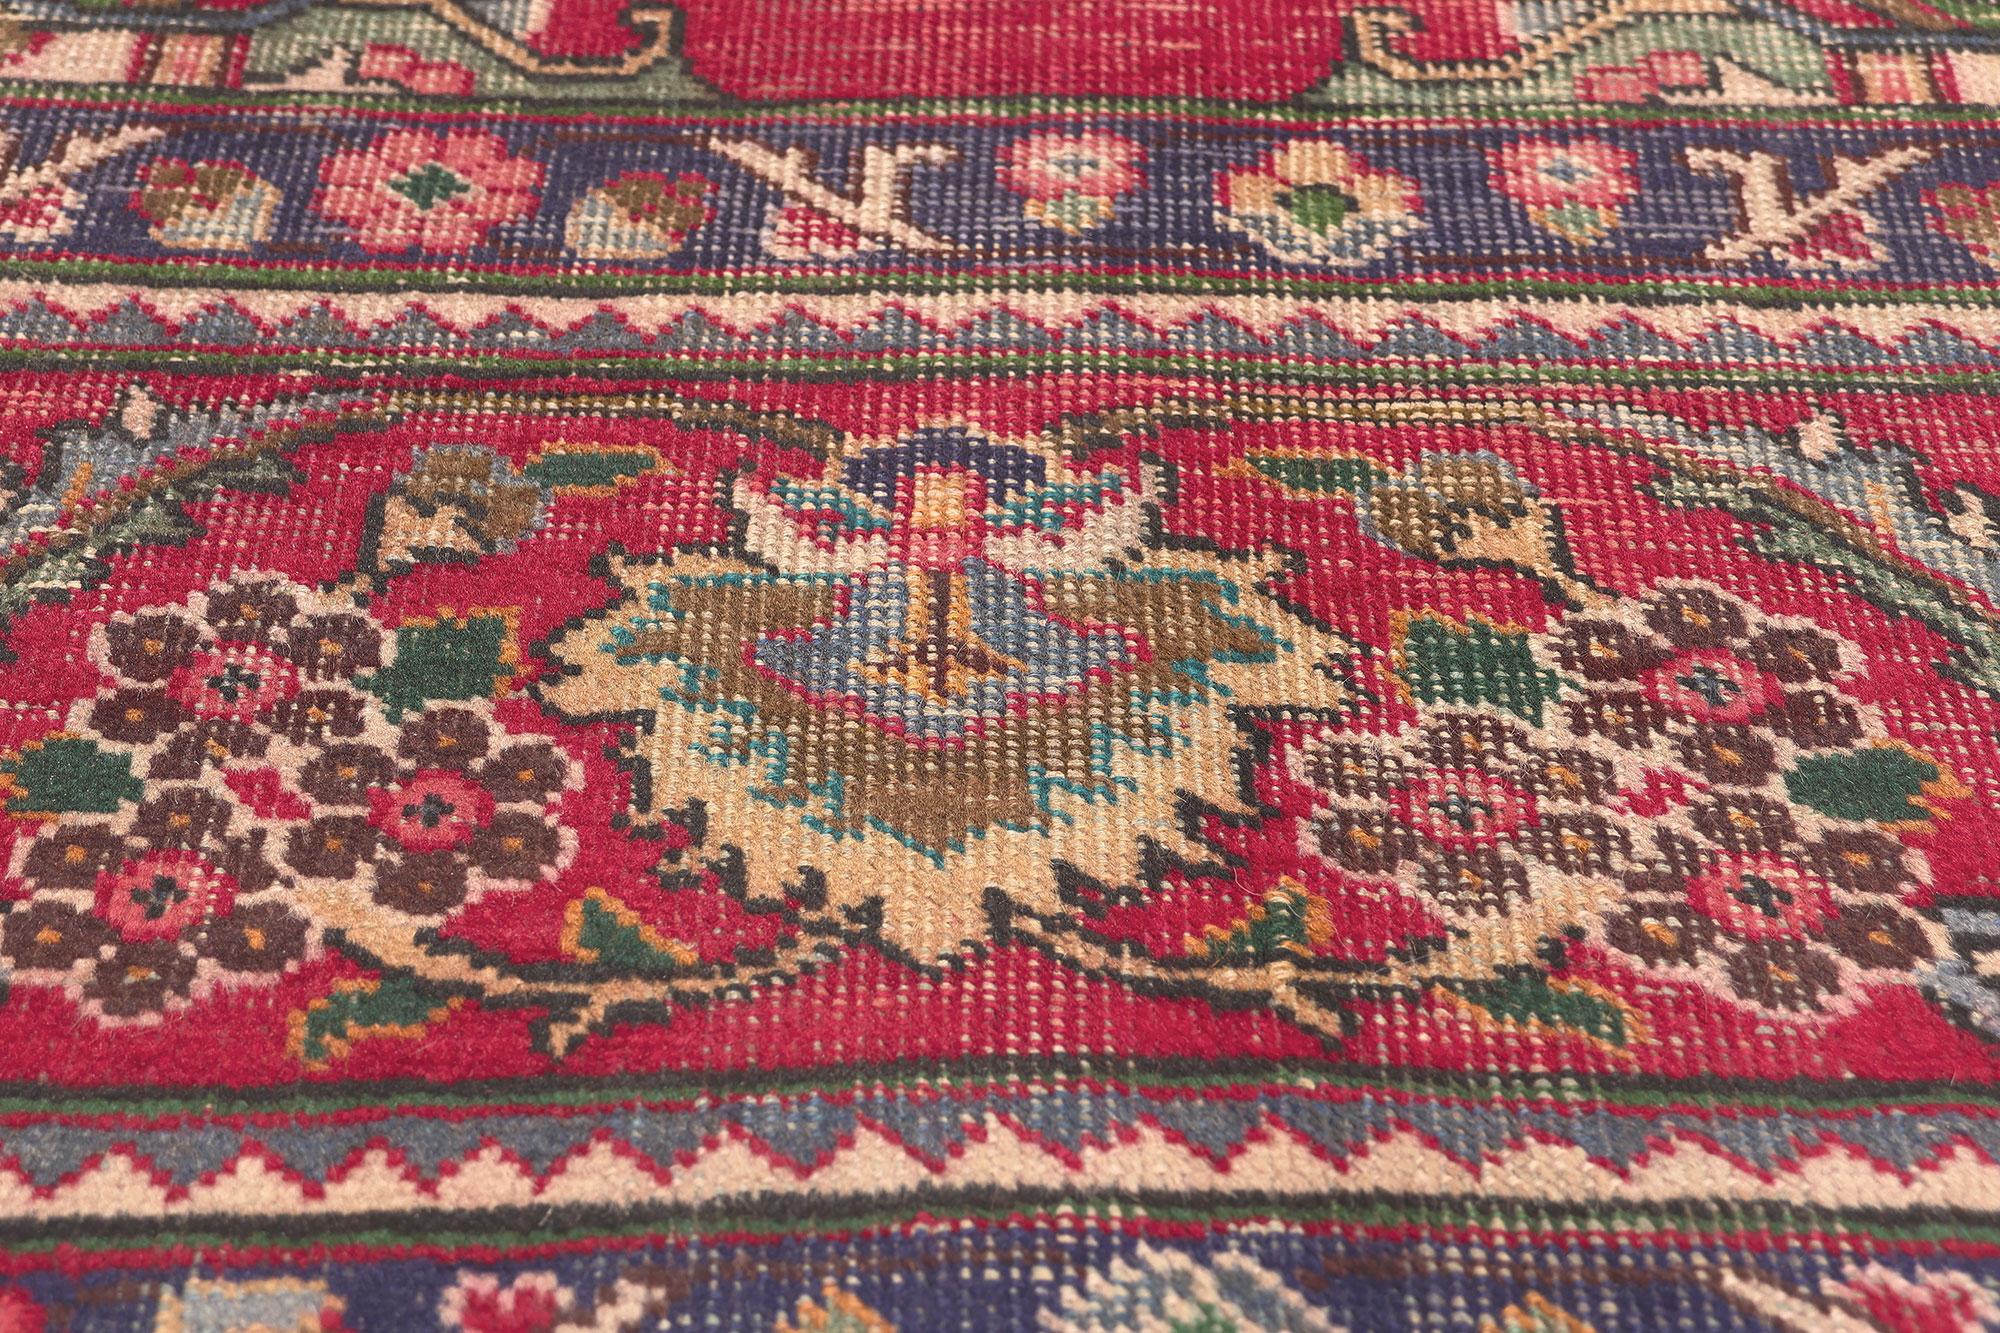 20th Century Antique-Worn Persian Tabriz Rug, Rustic Sensibility Meets Nostalgic Charm For Sale